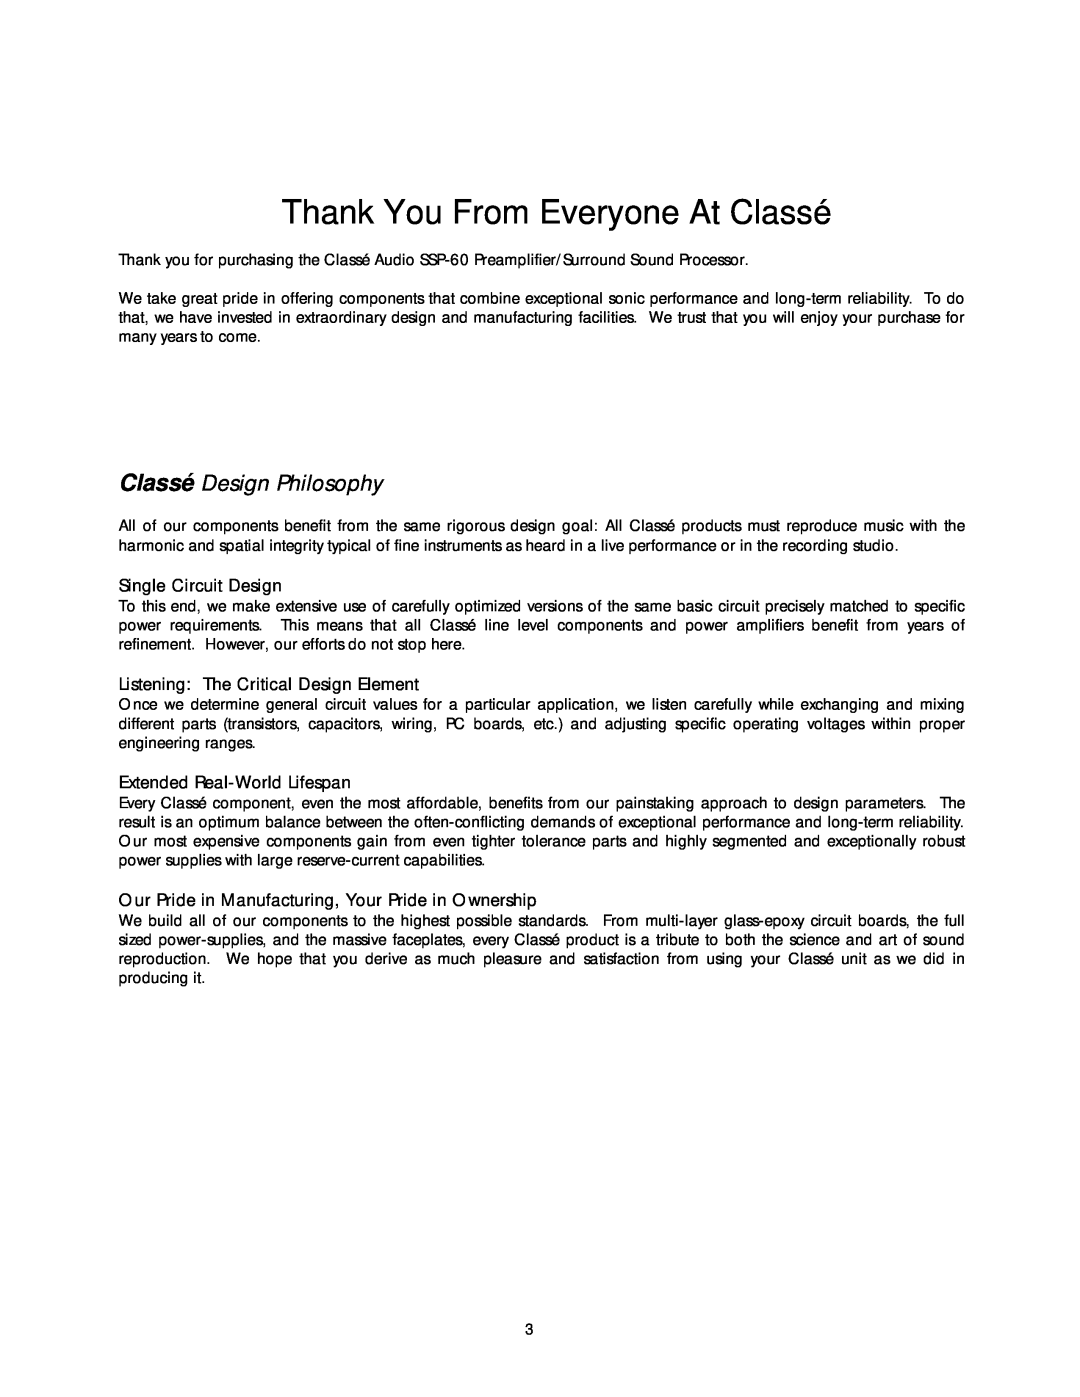 Classe Audio SSP-60 owner manual Thank You From Everyone At Classé, Classé Design Philosophy, Single Circuit Design 